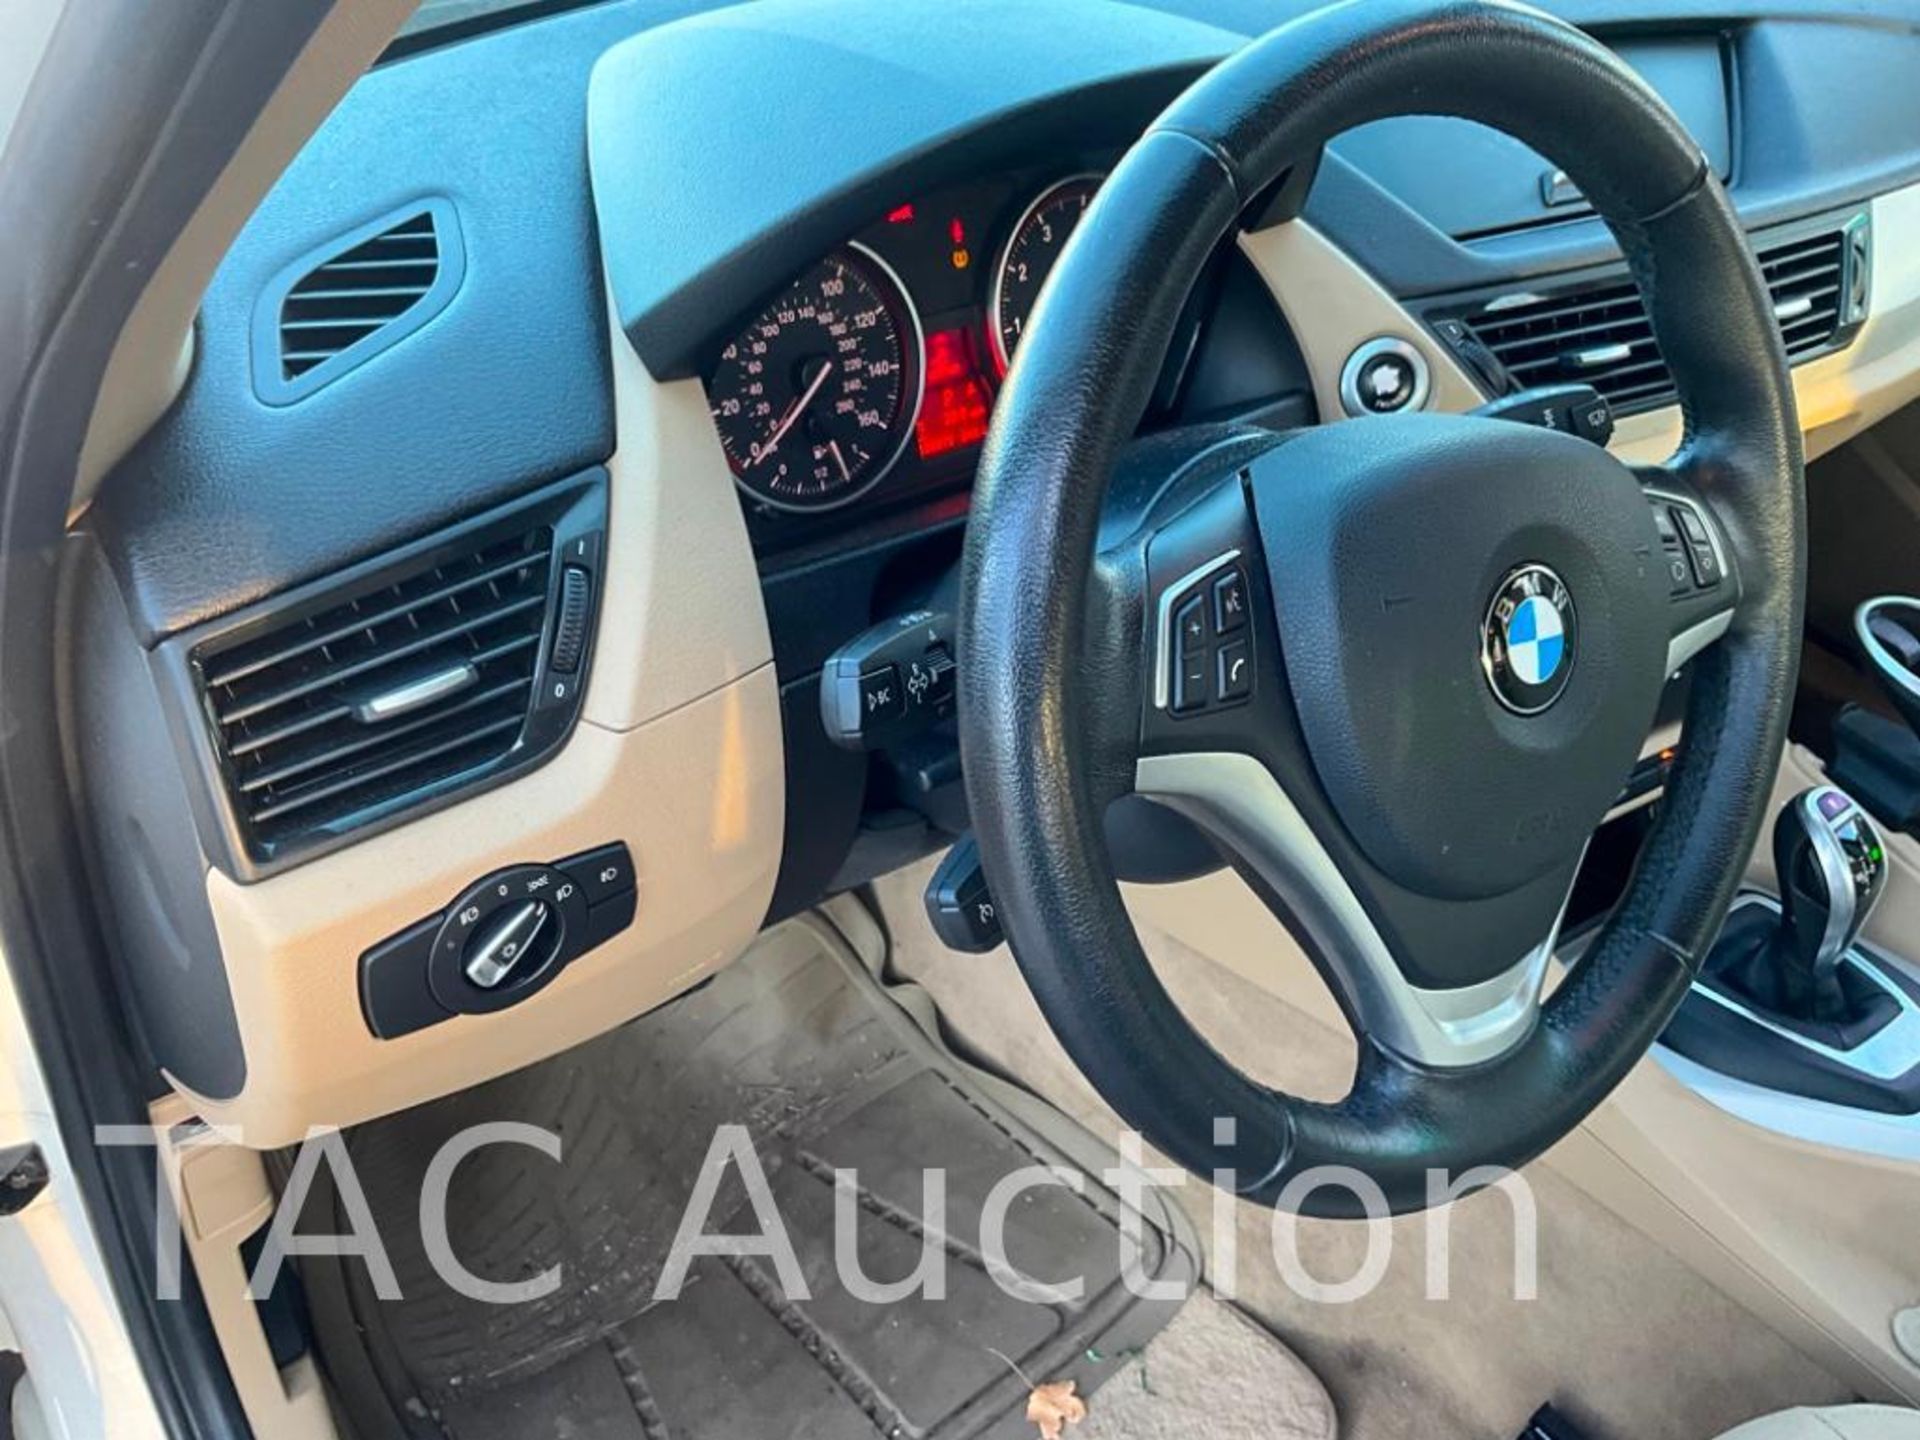 2014 BMW X1 SUV - Image 13 of 51